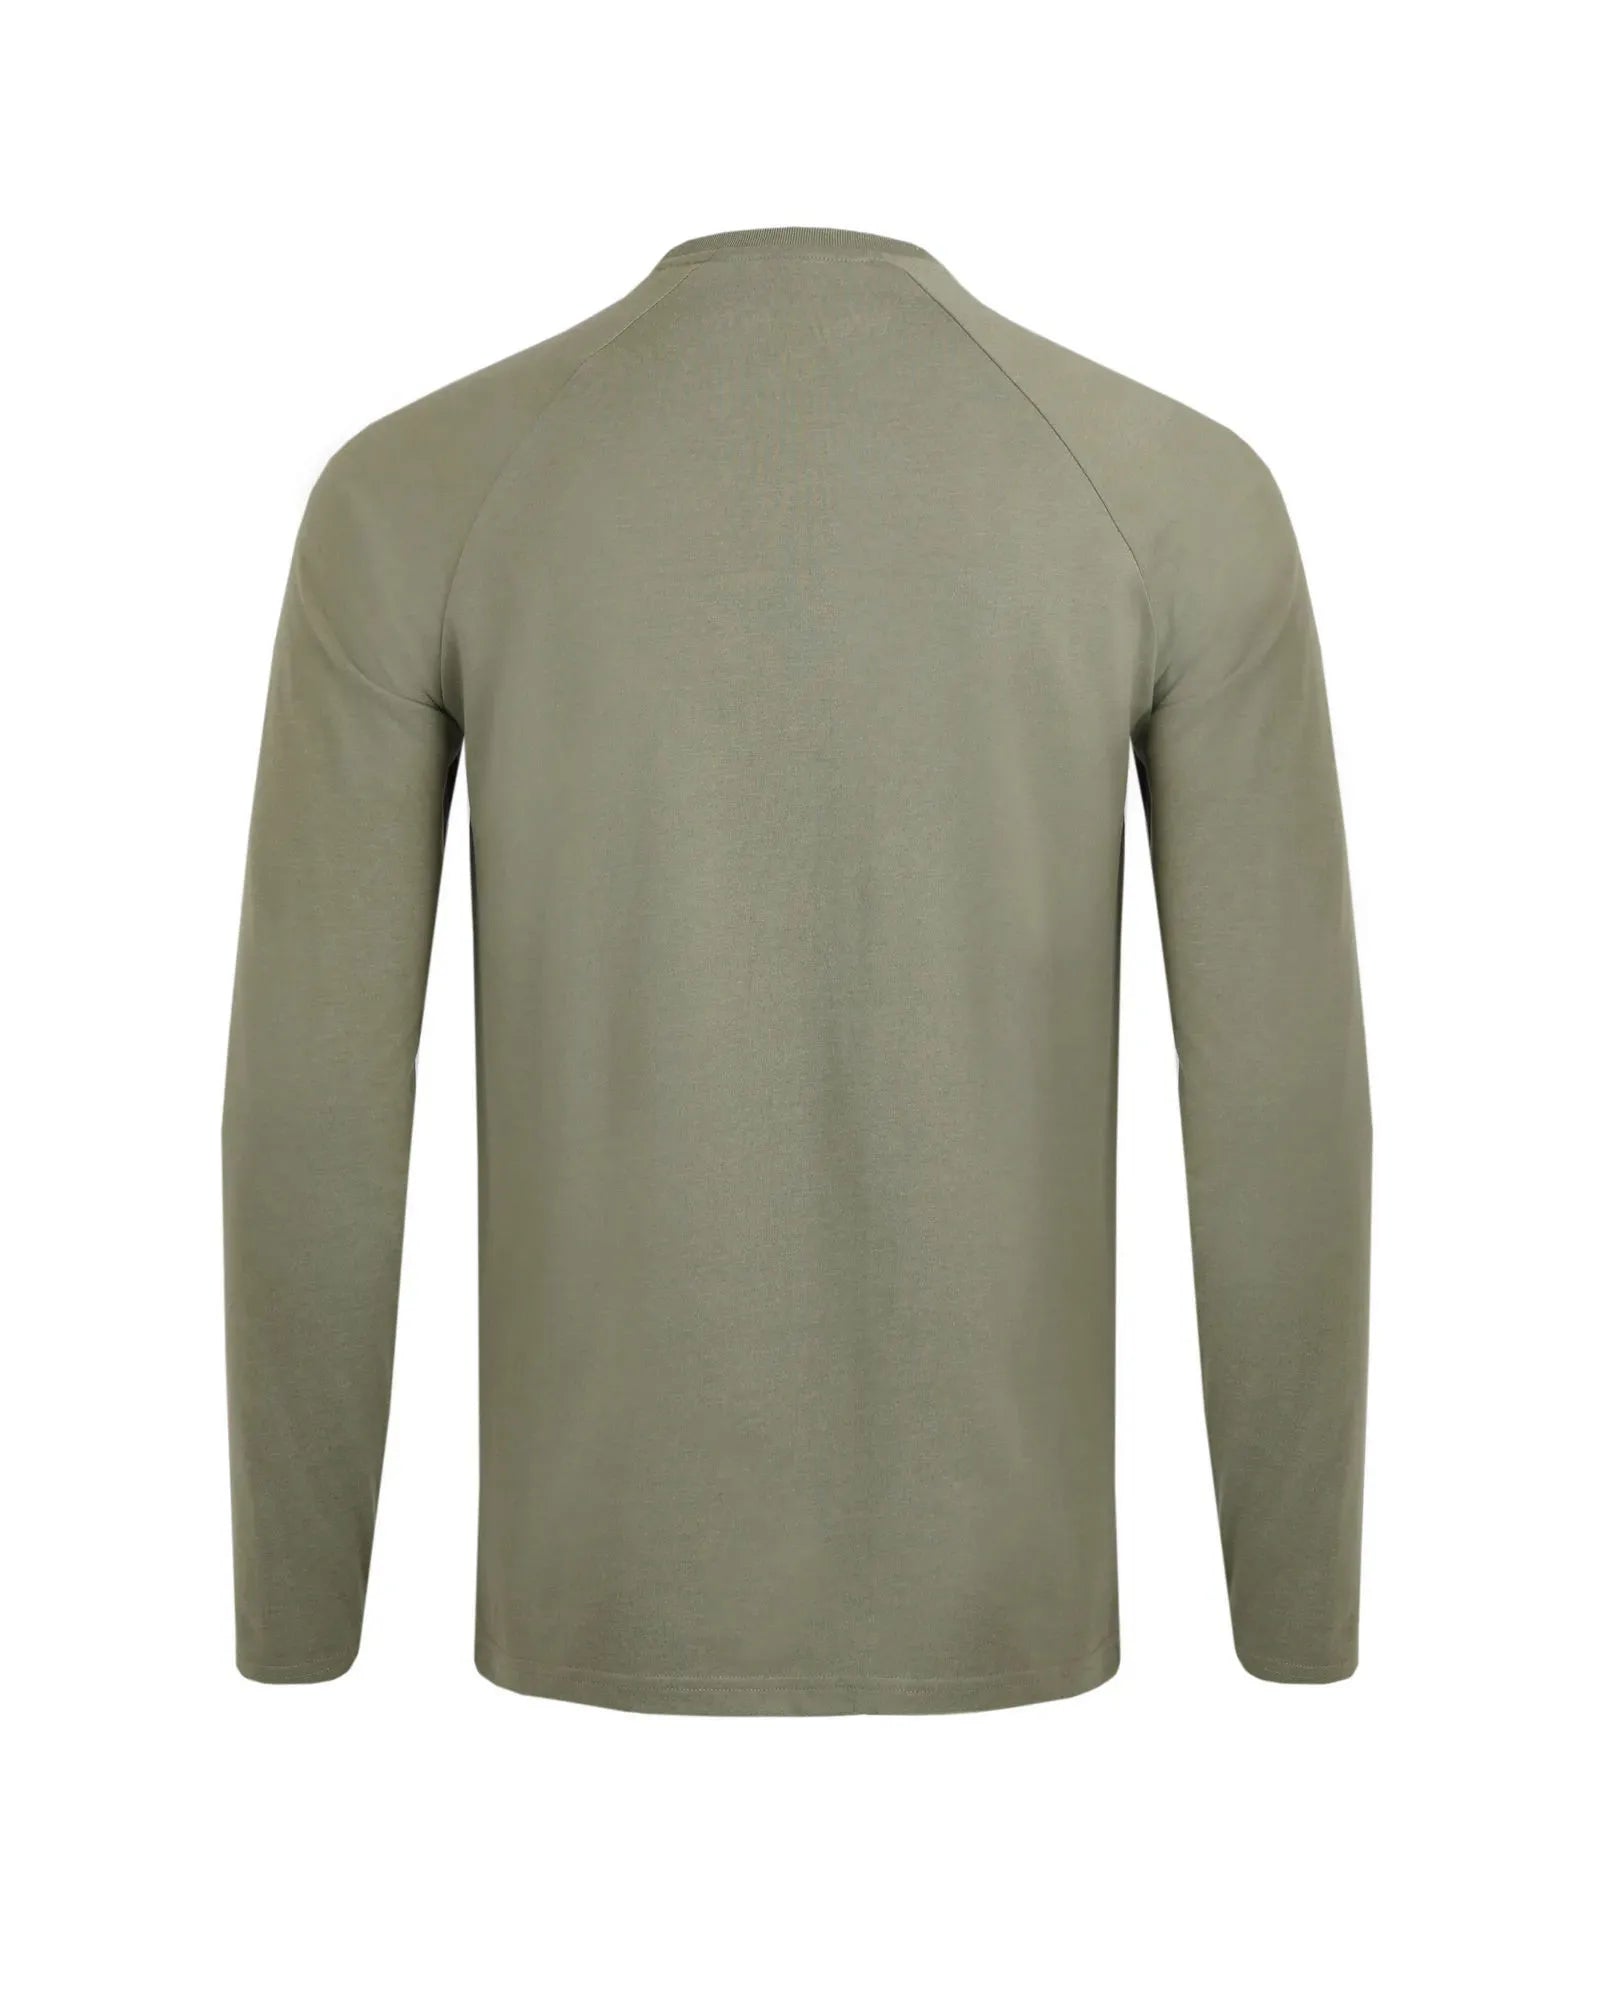 Richmond Raglan Long Sleeve T-Shirt - Khaki